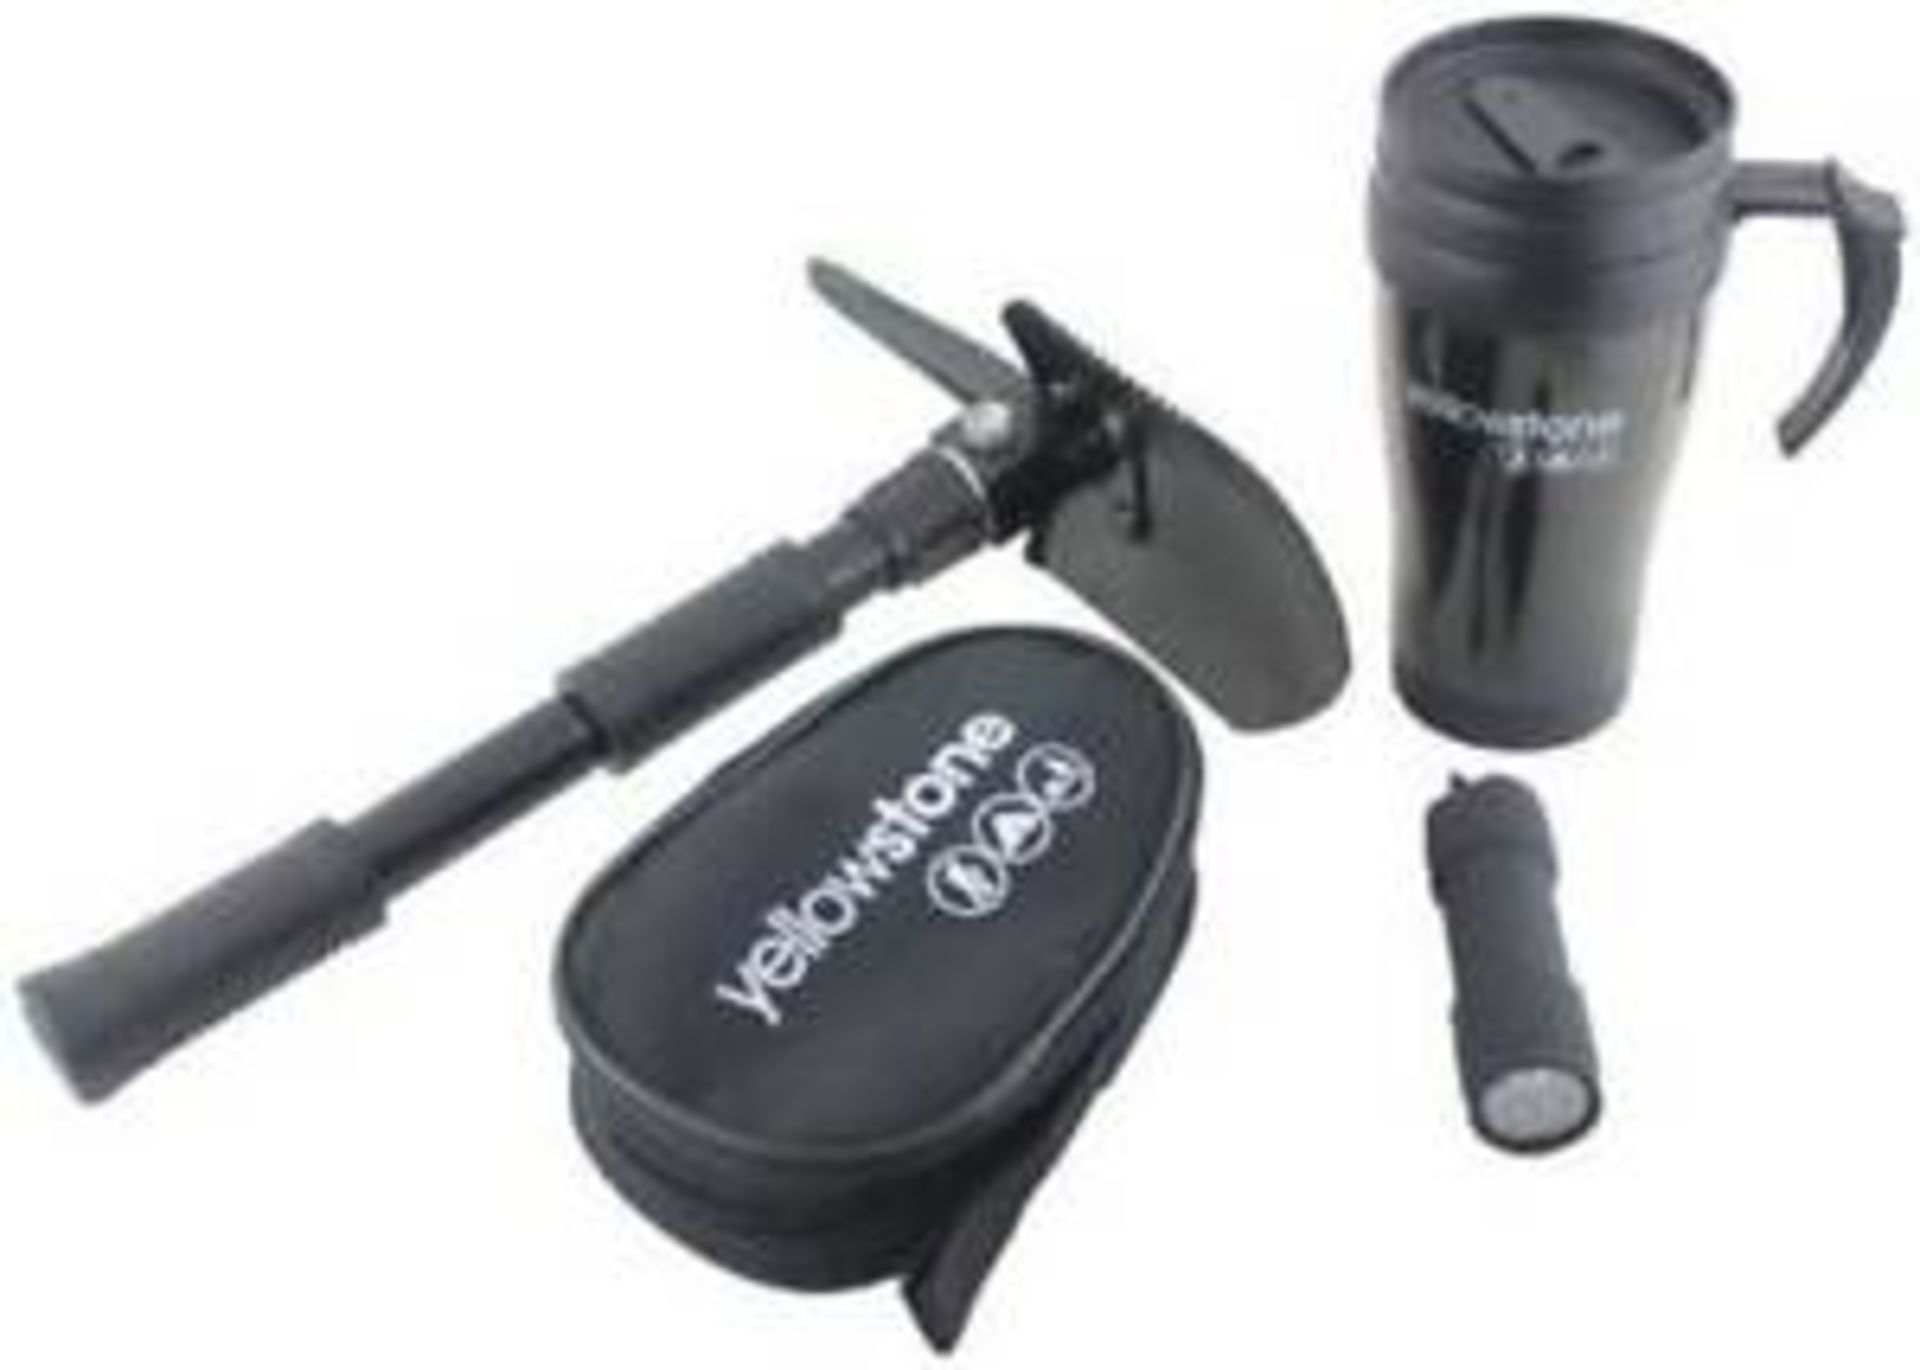 + VAT Brand New Car Travel Gift Set Including Mini Folding Shovel - 450ml Travel Mug & A 9 LED